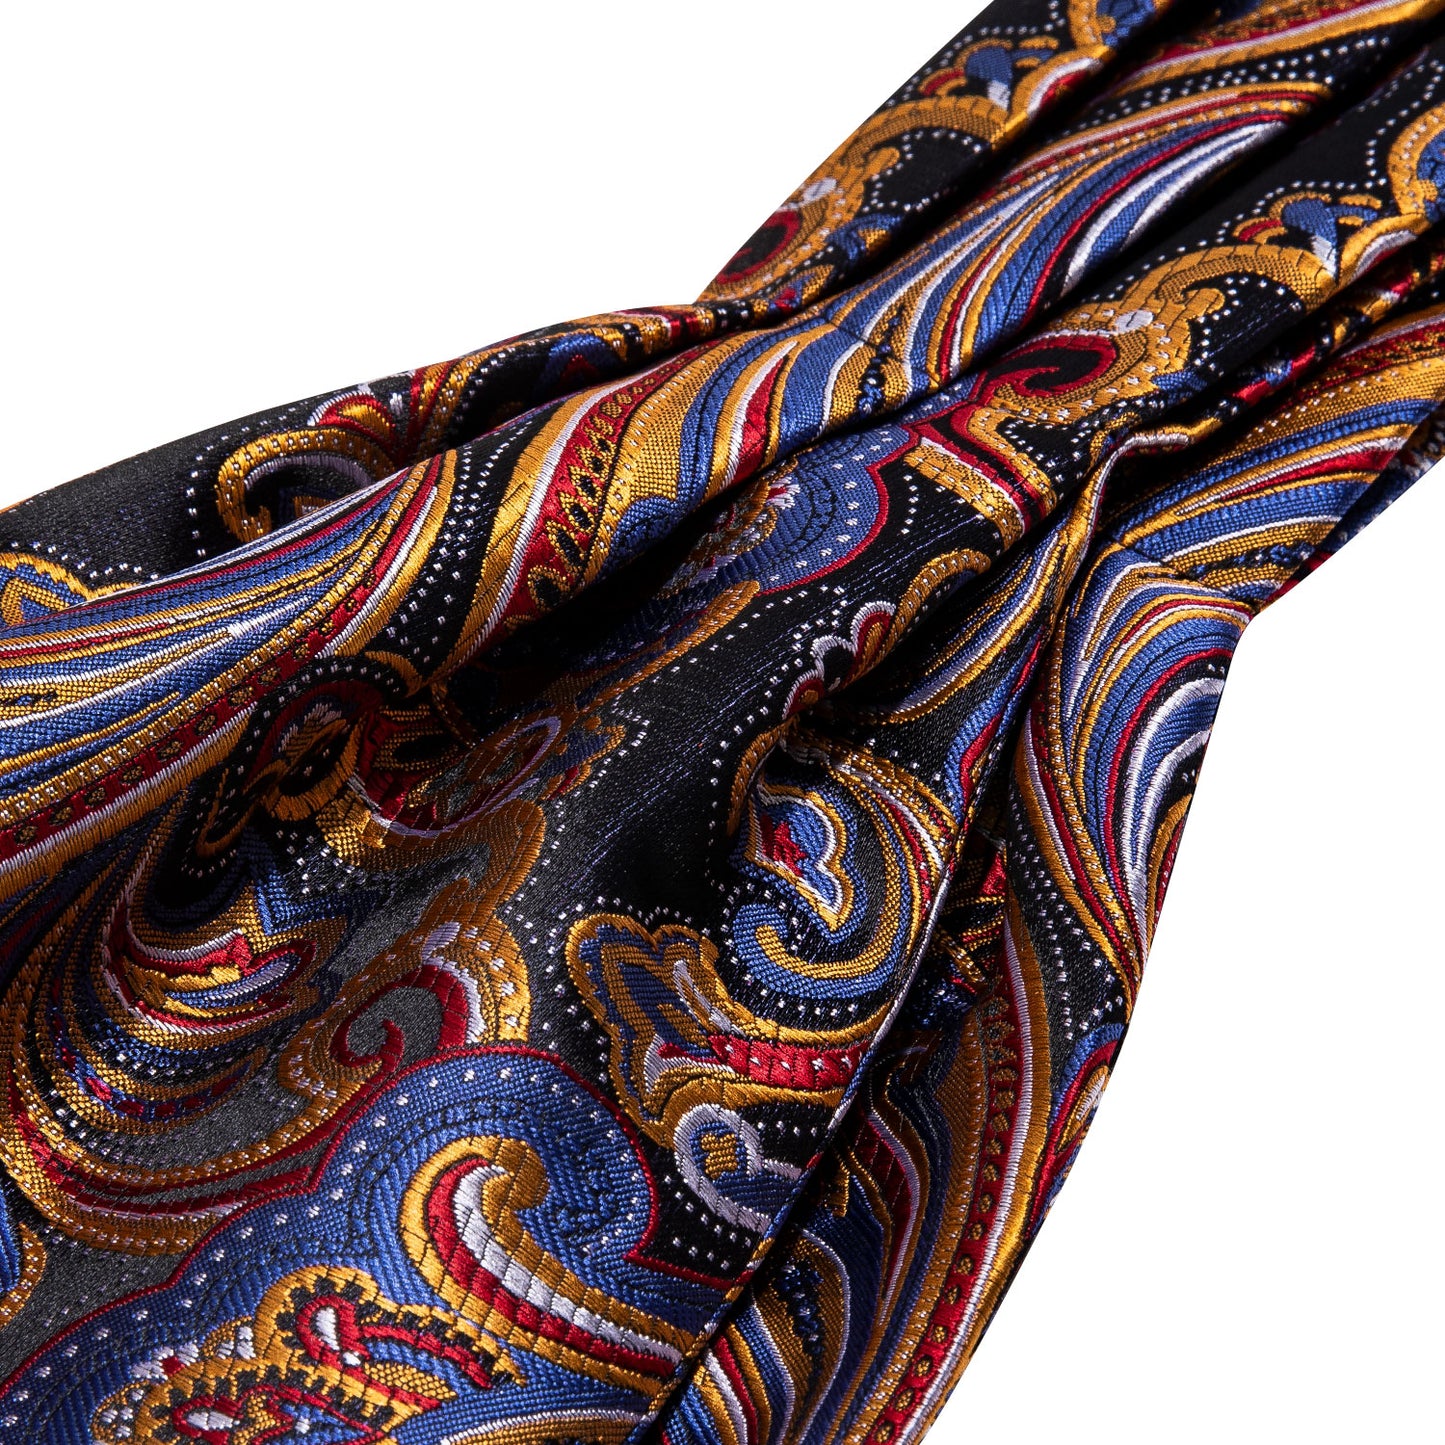 Victorian Ascot Silky Floral Day Cravat Set [Rainbow Neon]